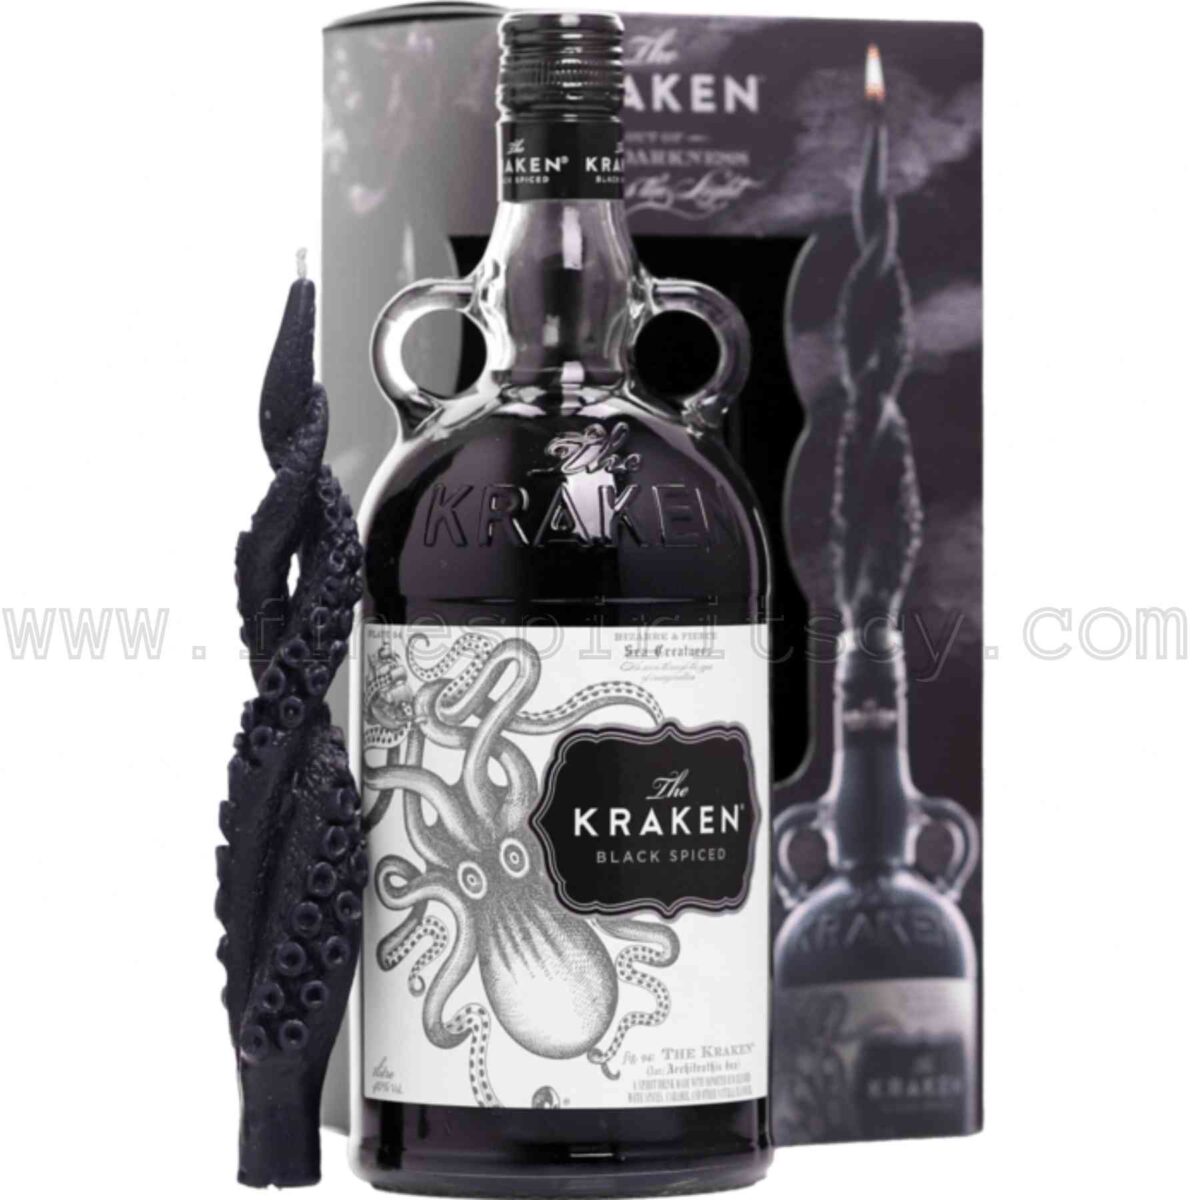 Kraken Black Spiced Rum With Deterring Tentacle Candle